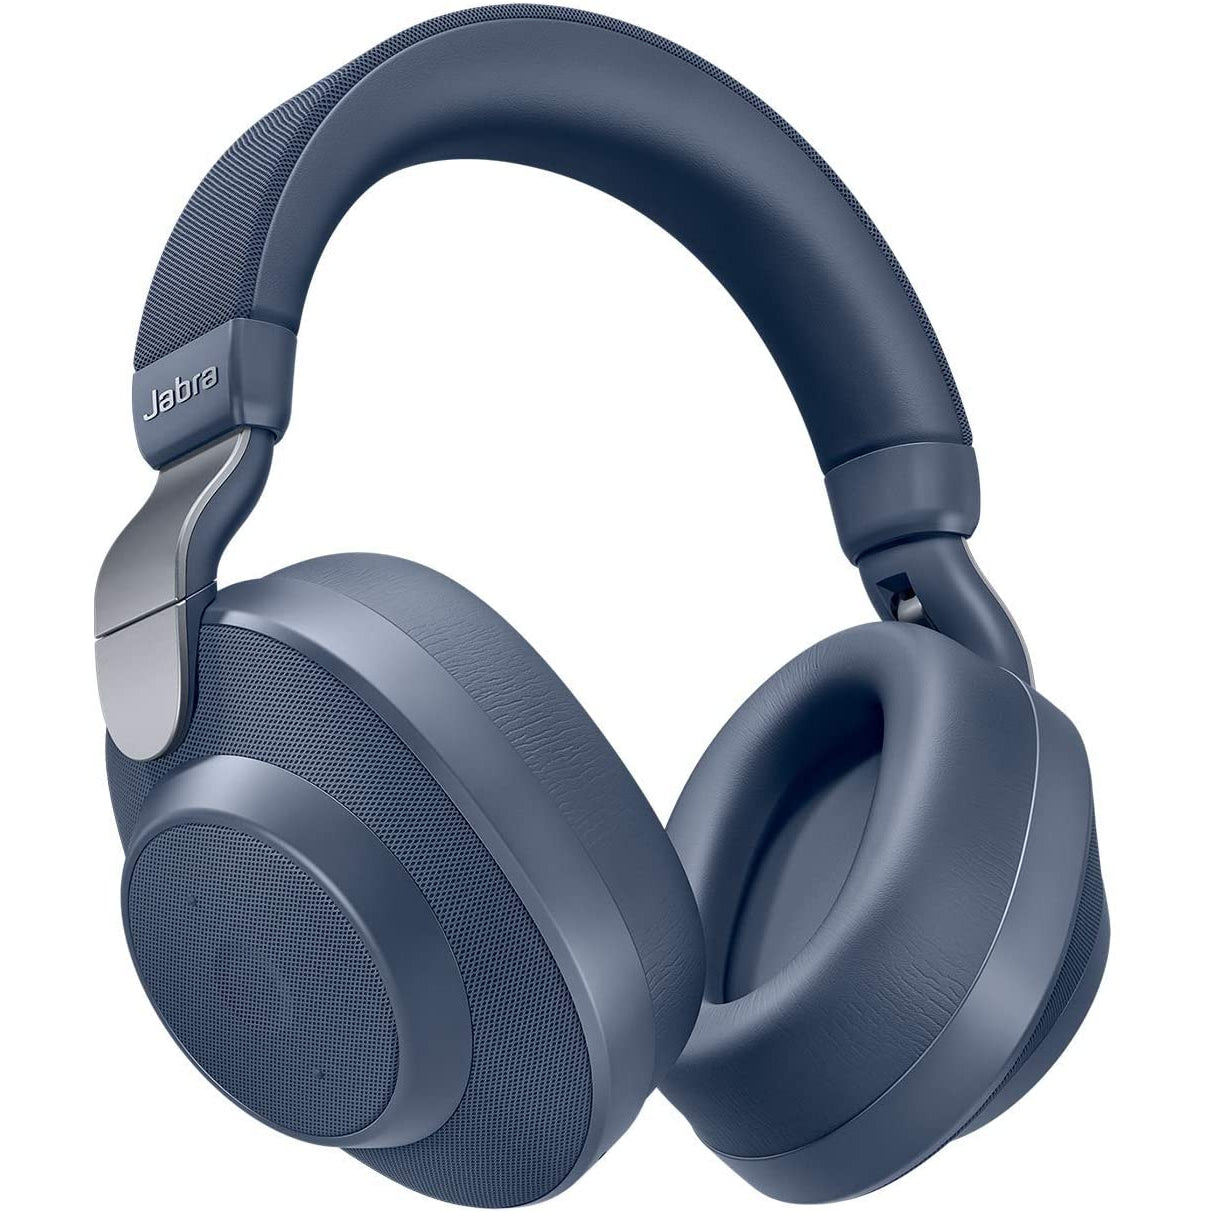 Jabra Elite 85h Over-Ear Headphones Active Noise Cancelling Wireless Earphones - Navy Blue